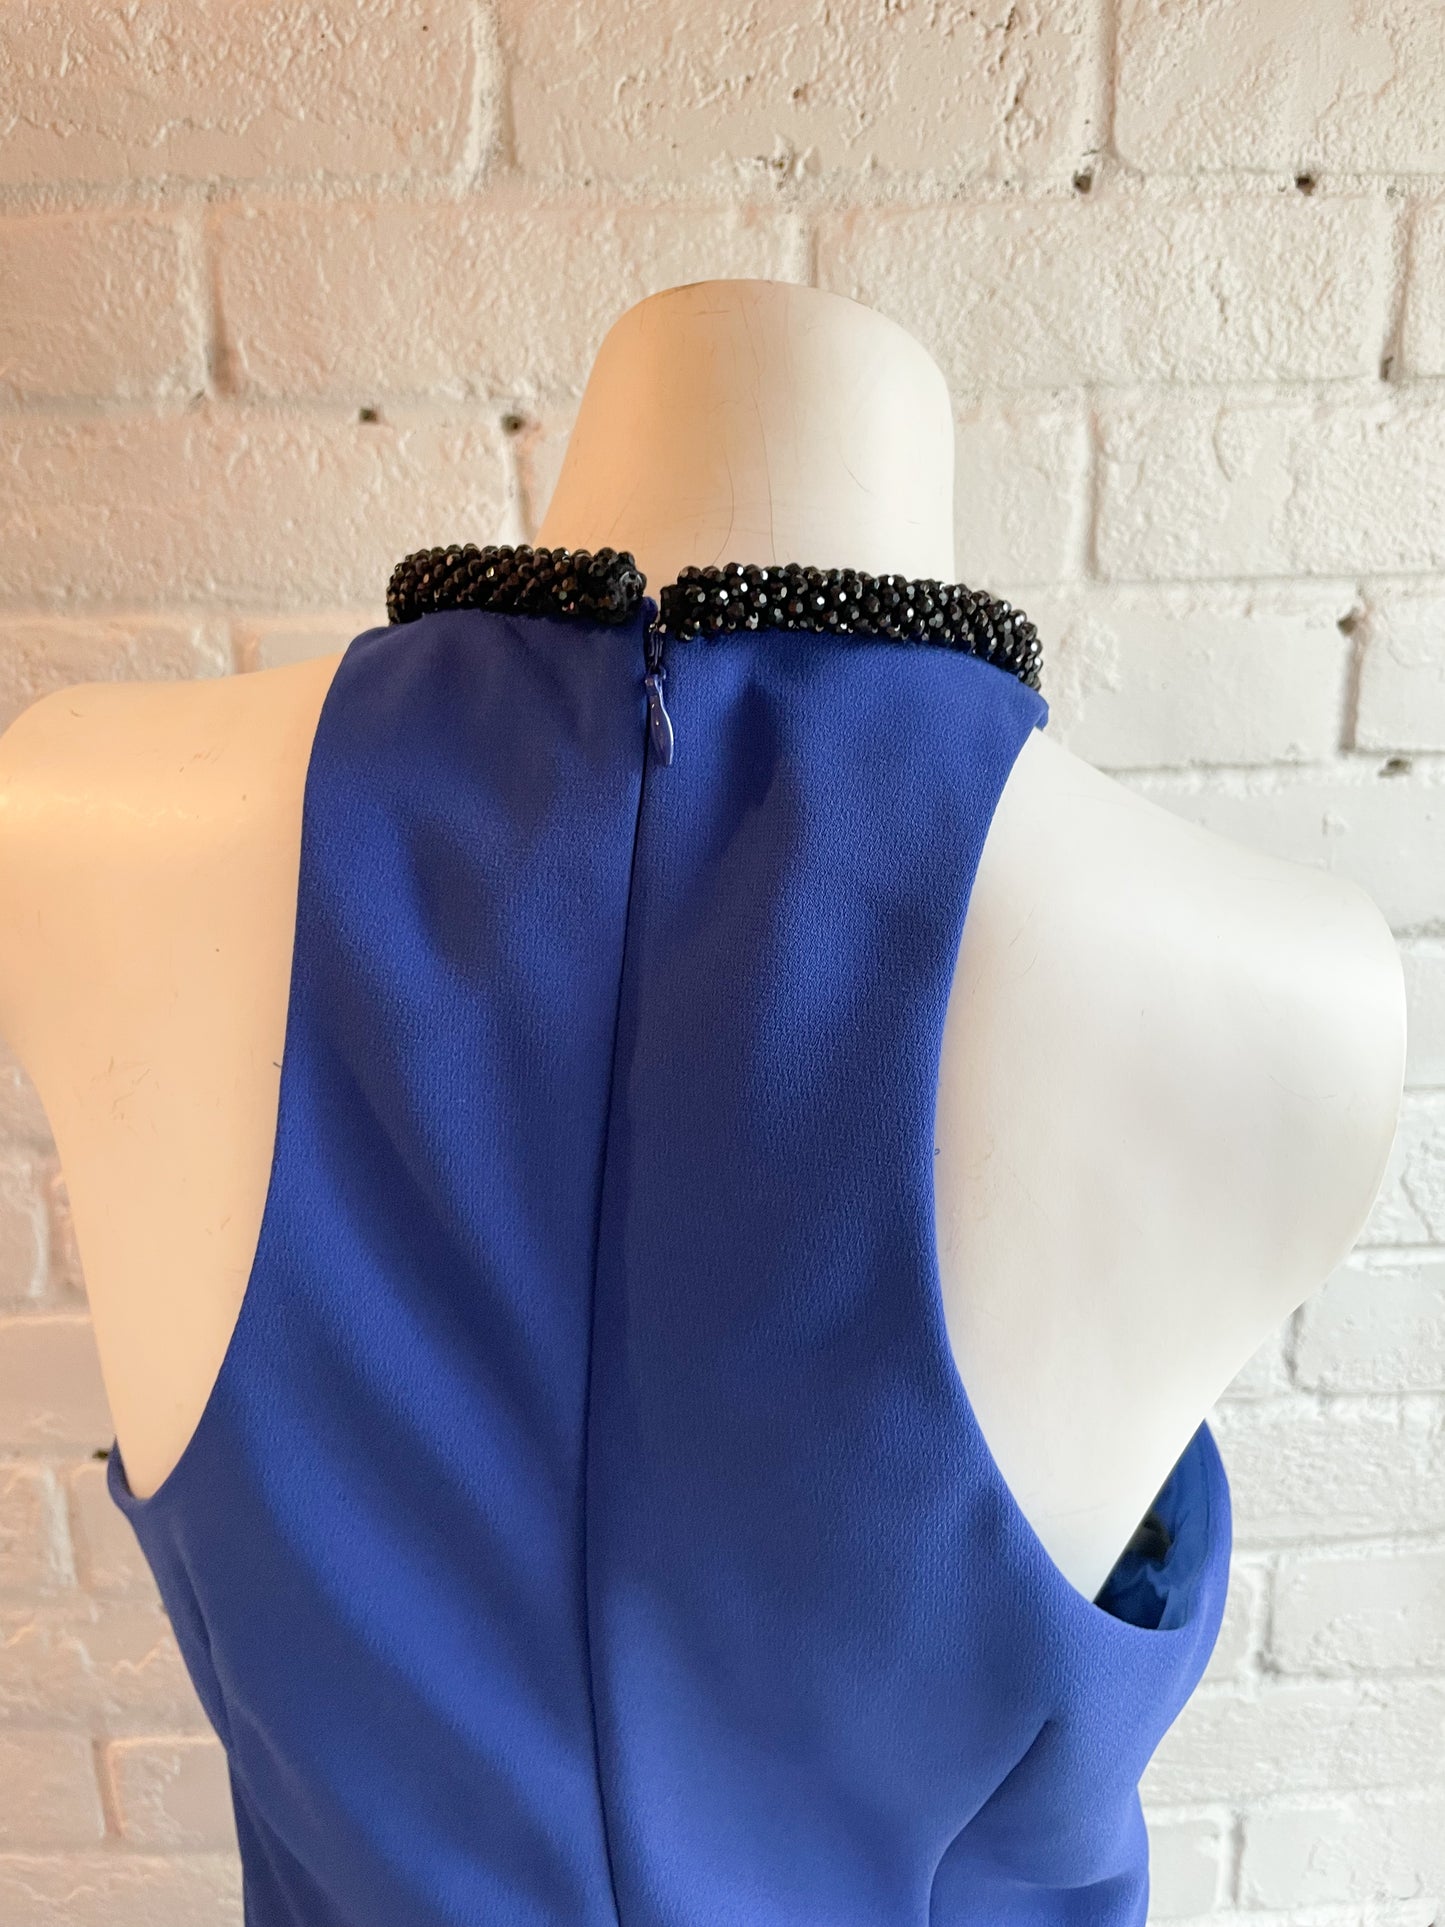 Calvin Klein Royal Blue Halter Beaded Neck Maxi Sheath Dress with Chapel Train - Size 4